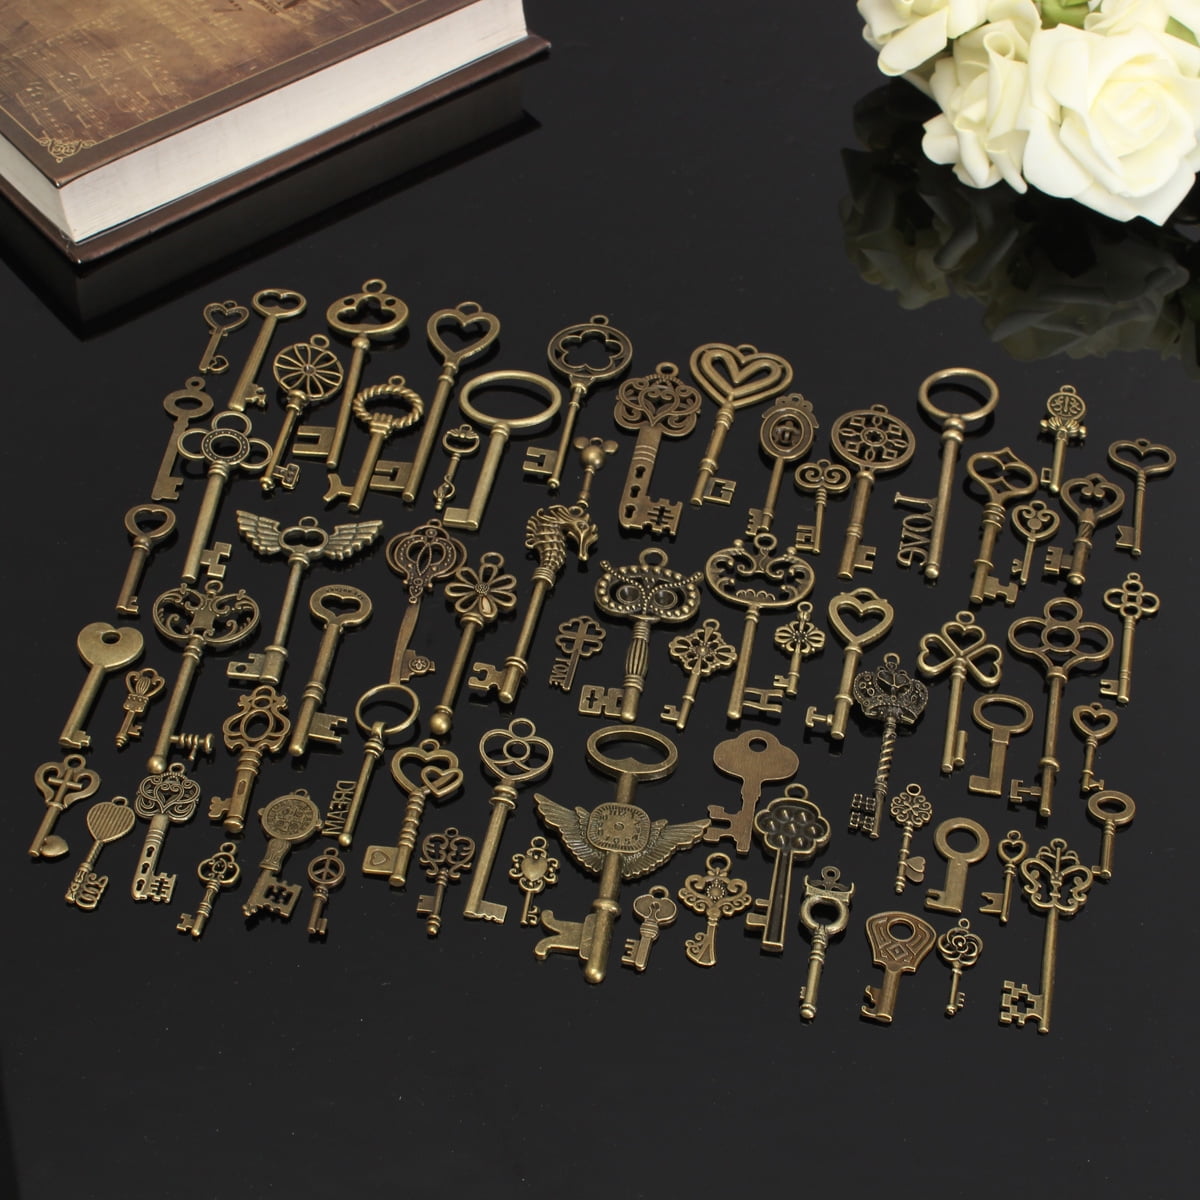 Heart Key GLOW IN THE DARK Antique Bronze Pendant Charm Necklace Skeleton Cute 